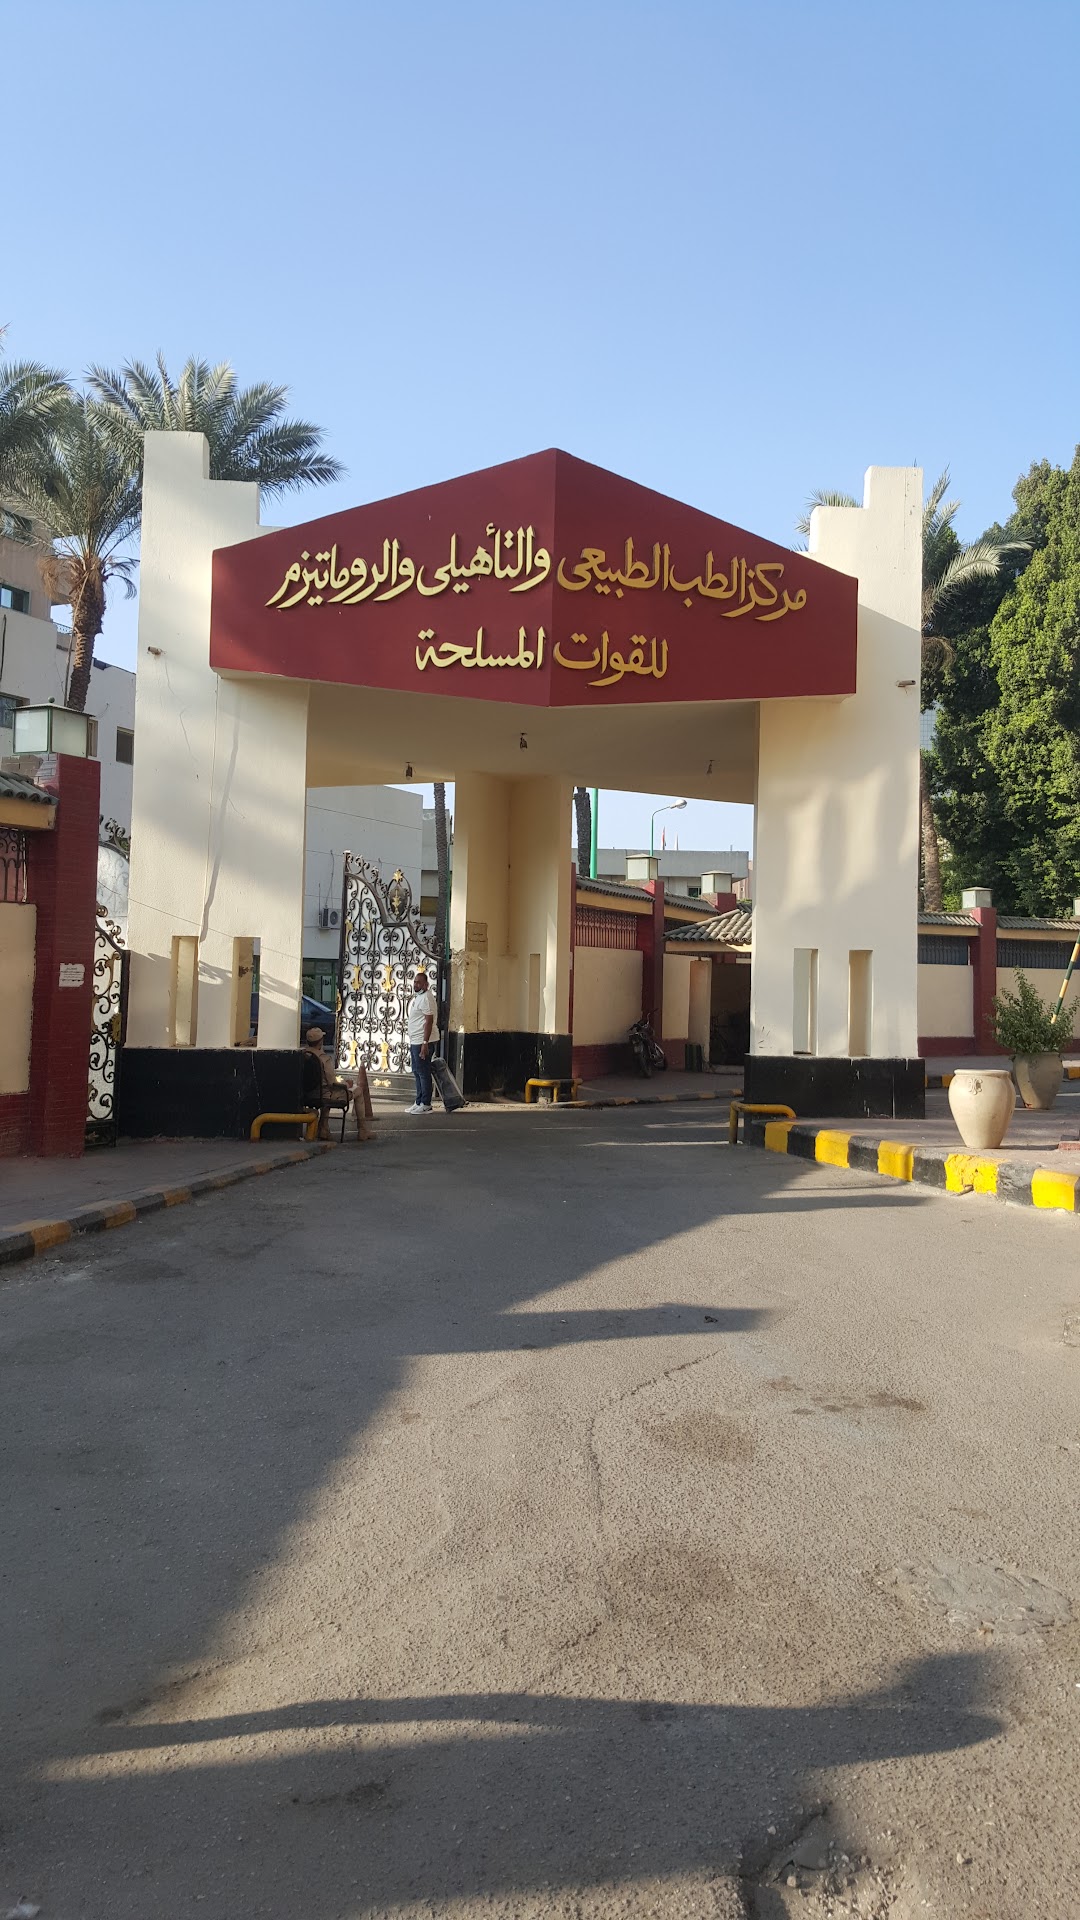 Armed forces Rehabilitation hospital in Agouza